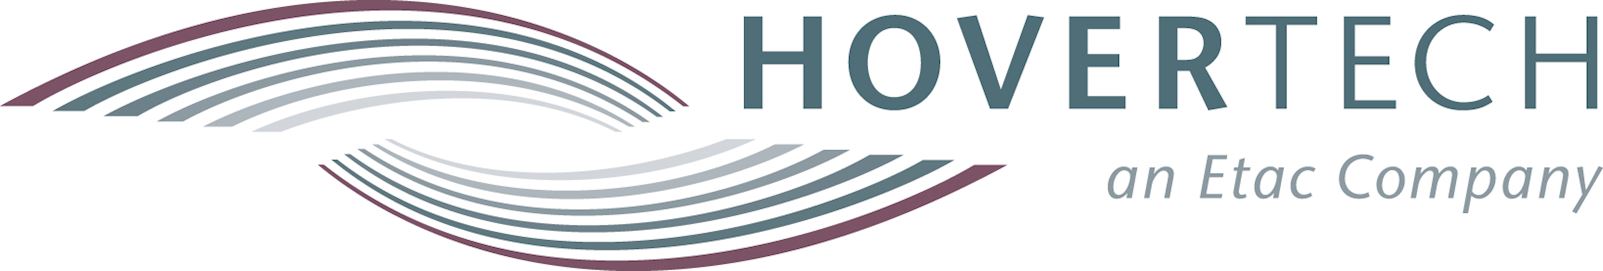 Hovertech, an Etac Company